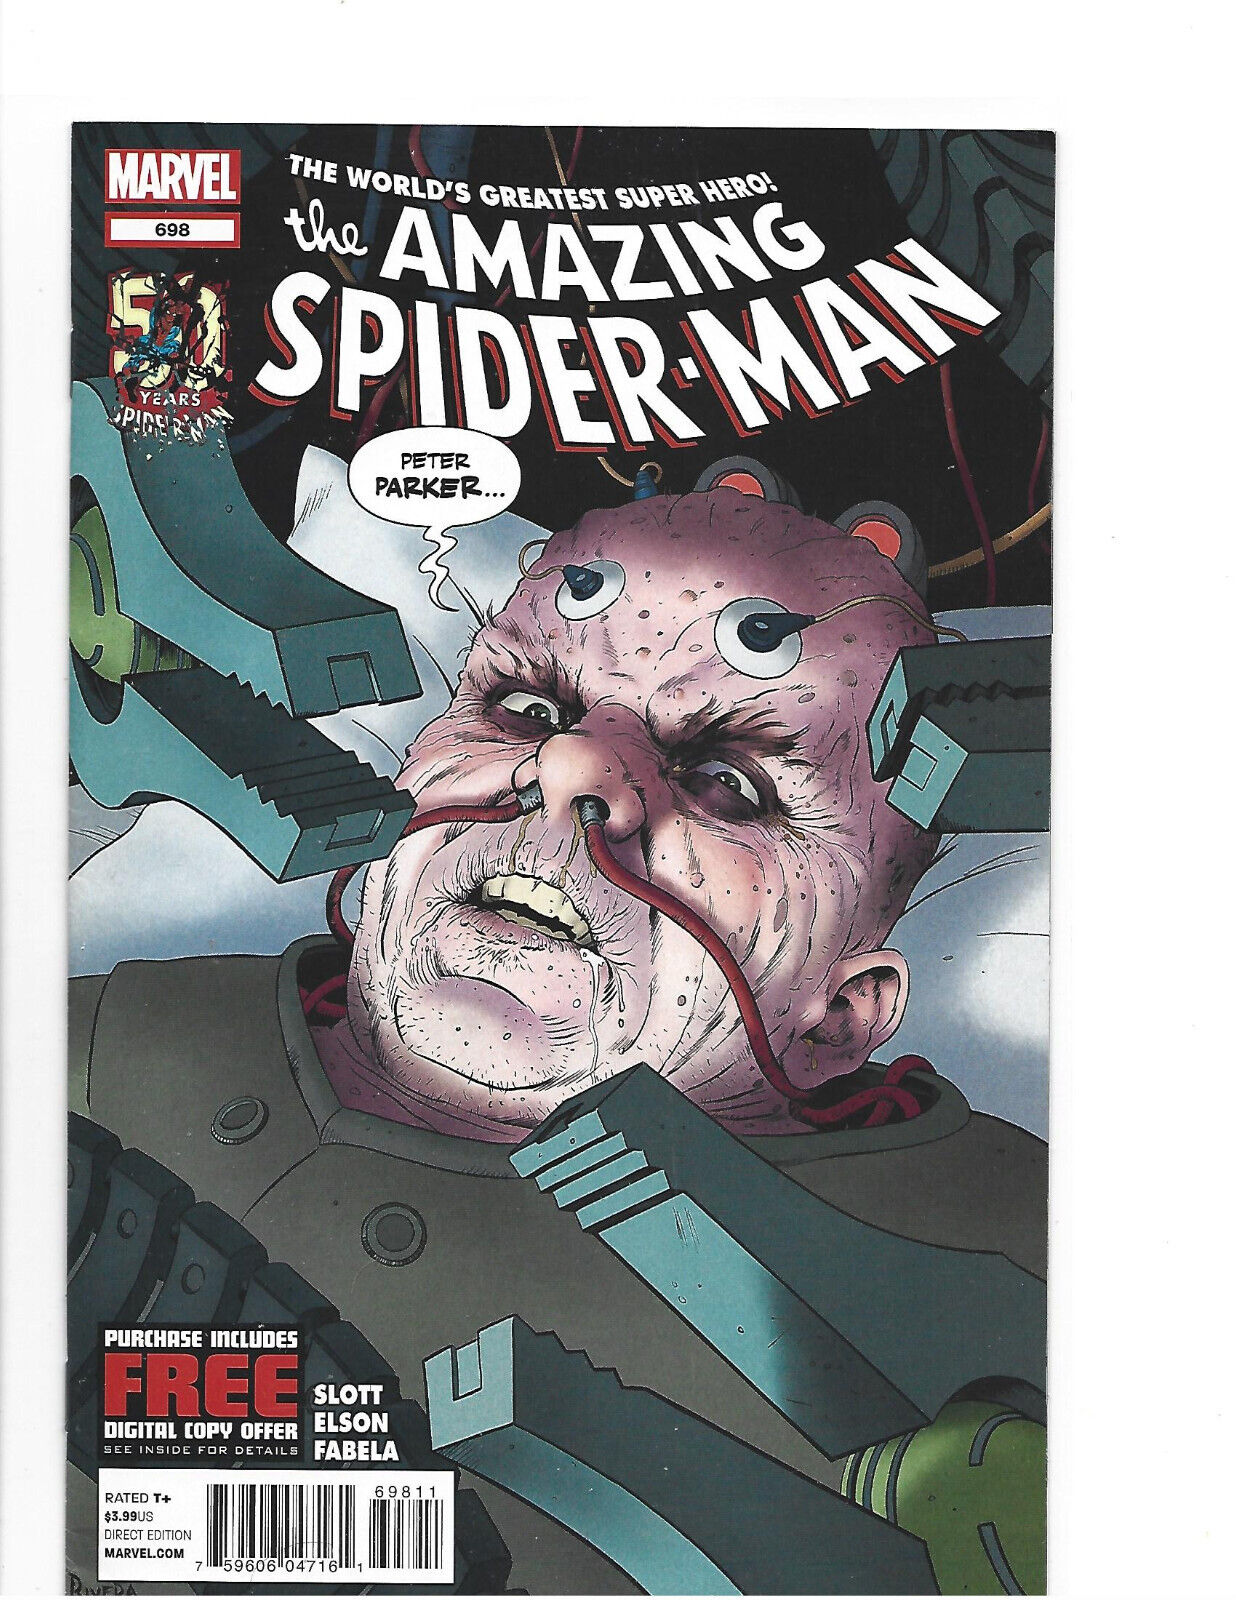 AMAZING SPIDER-MAN # 698 * FIRST PRINT *FIRST SUPERIOR SPIDER-MAN* MARVEL COMICS